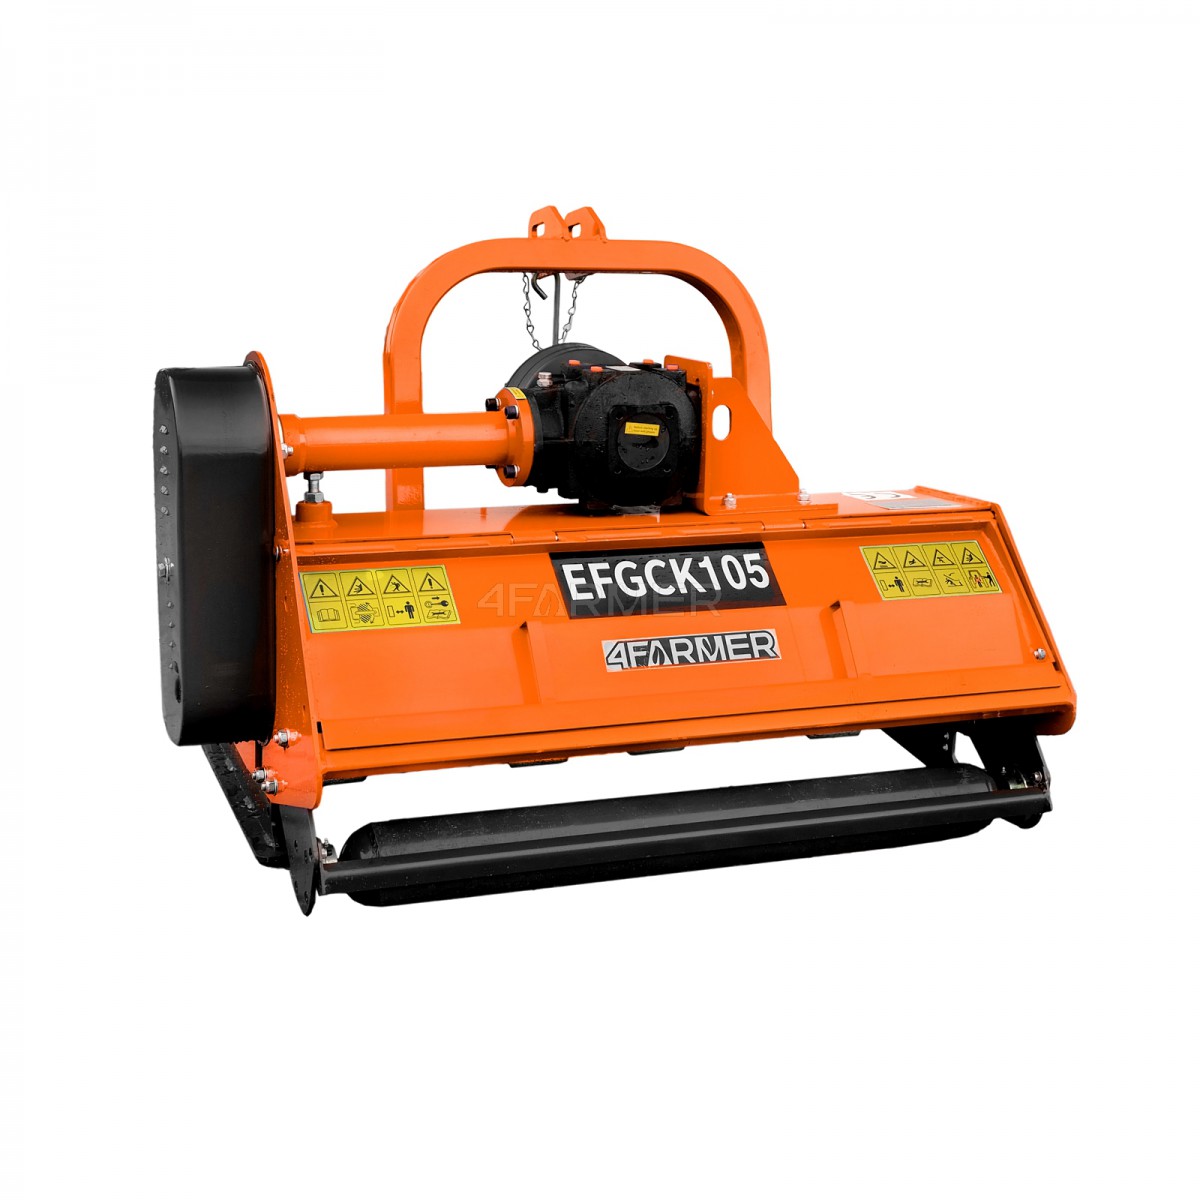 Flail mower EFGC-K 115, opening 4FARMER hatch - orange